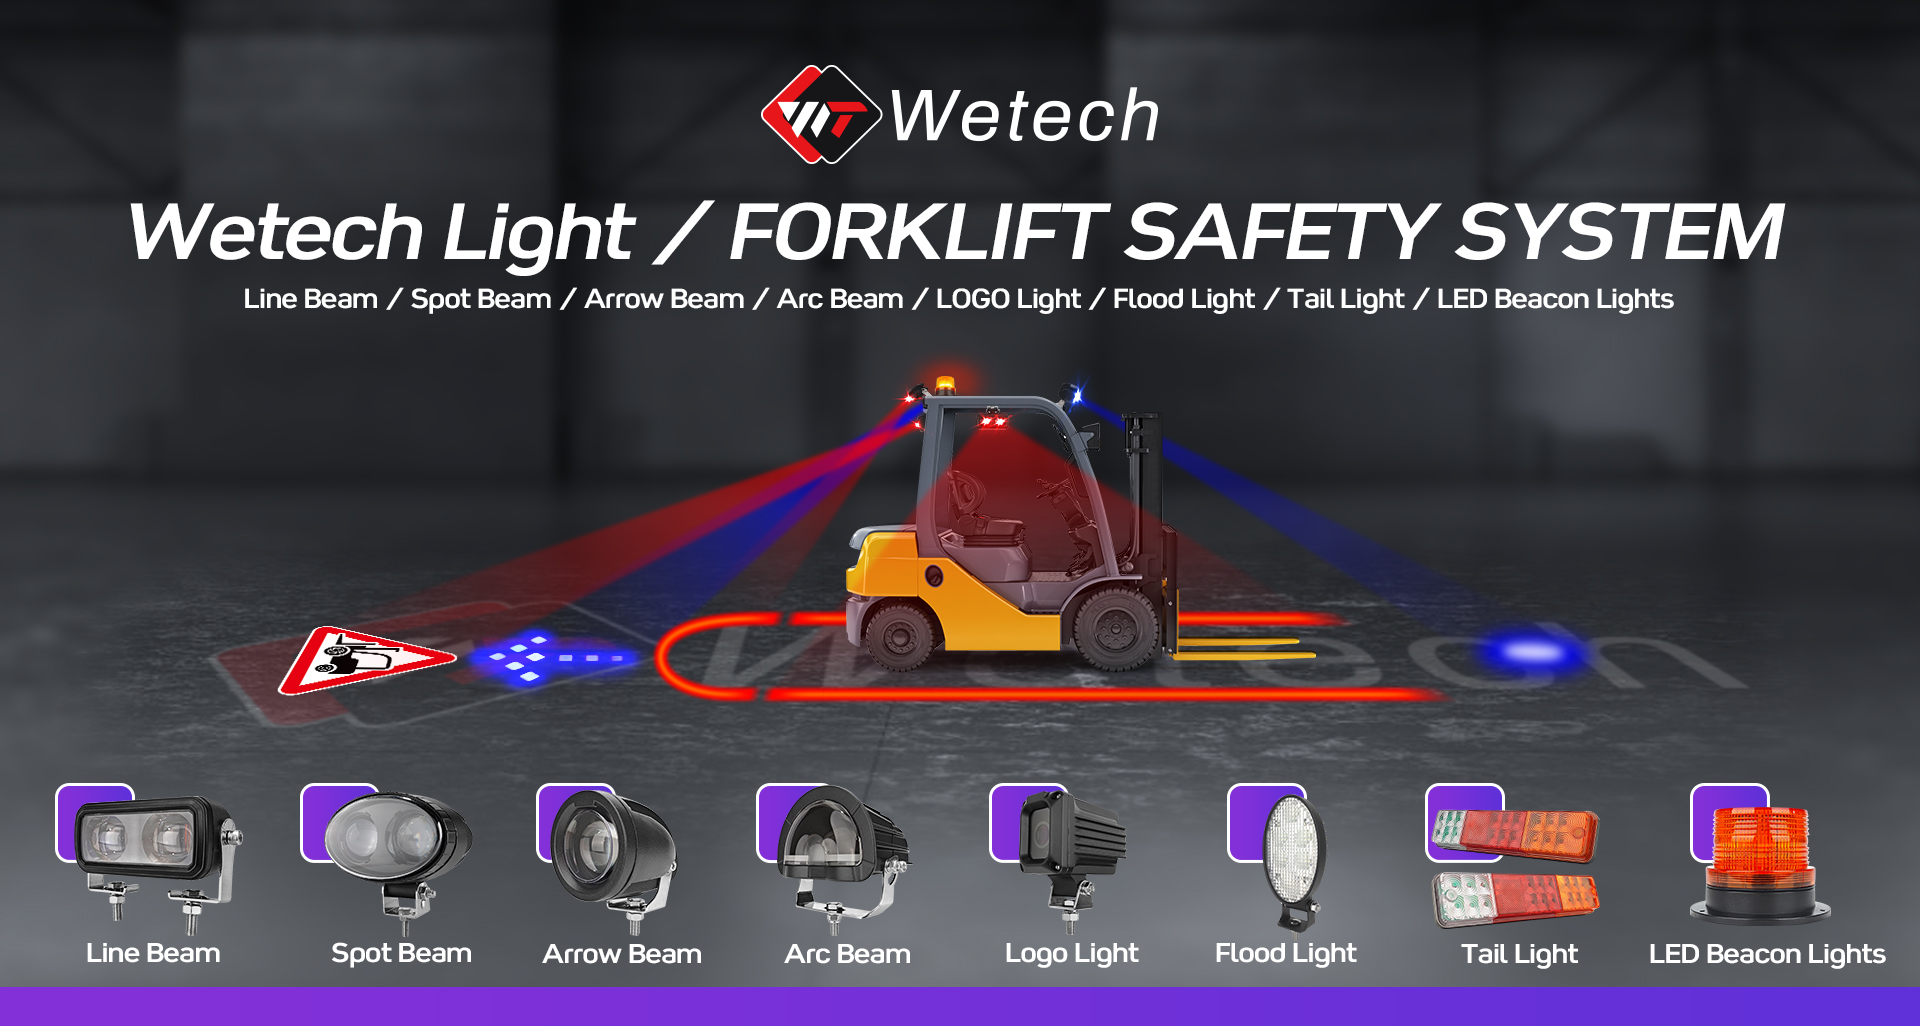 WETECH 30W Forklift Warning Light Line Beam Safety Lamp